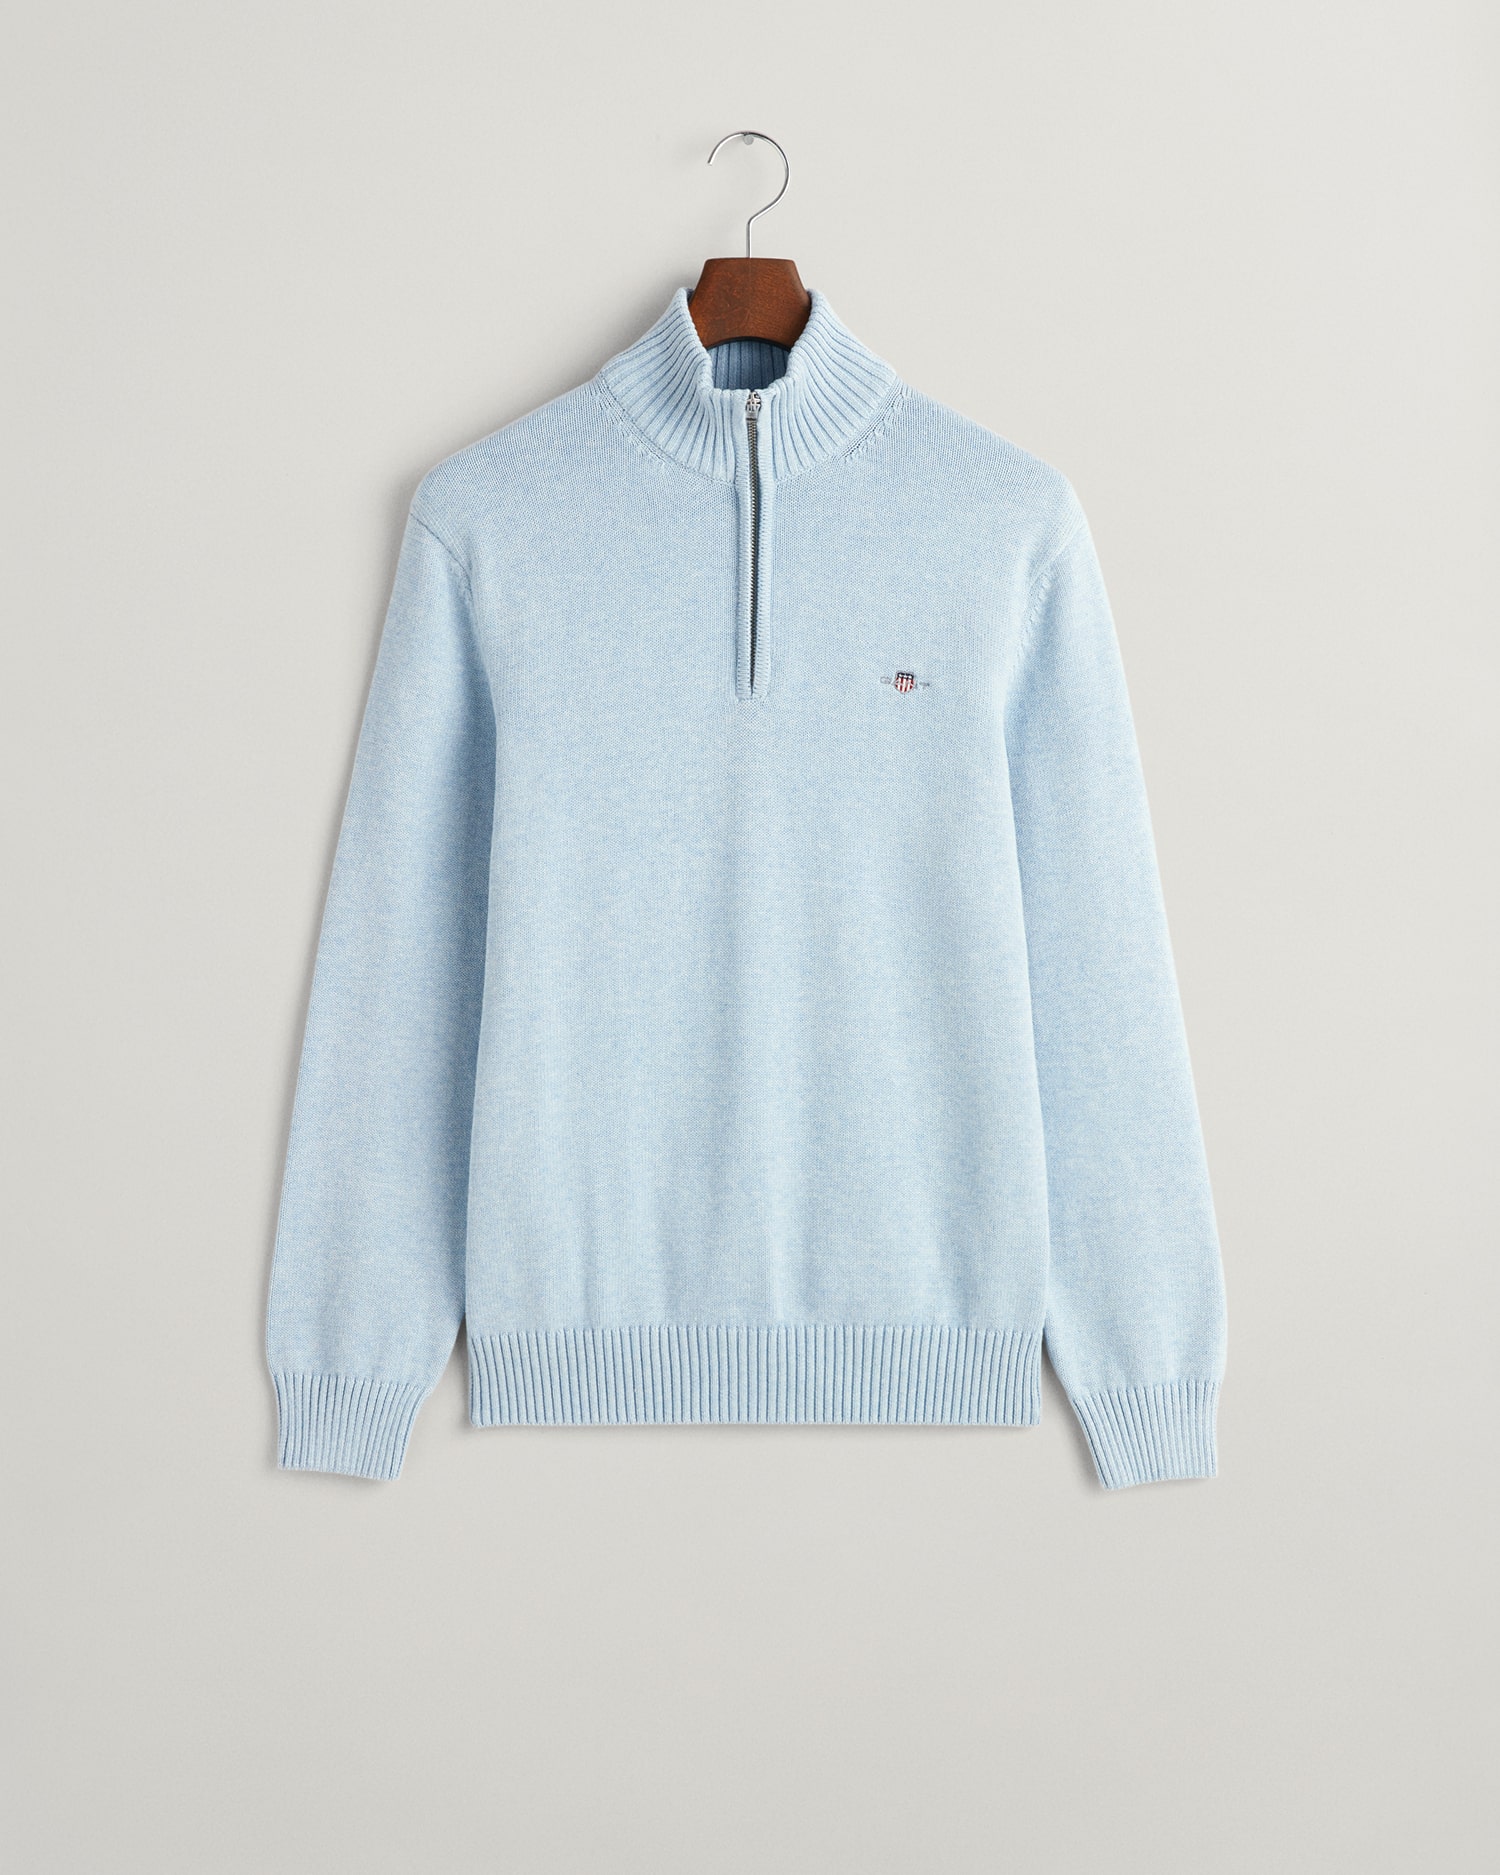 Gant Casual Cotton Half-Zip Sweater in Light Blue